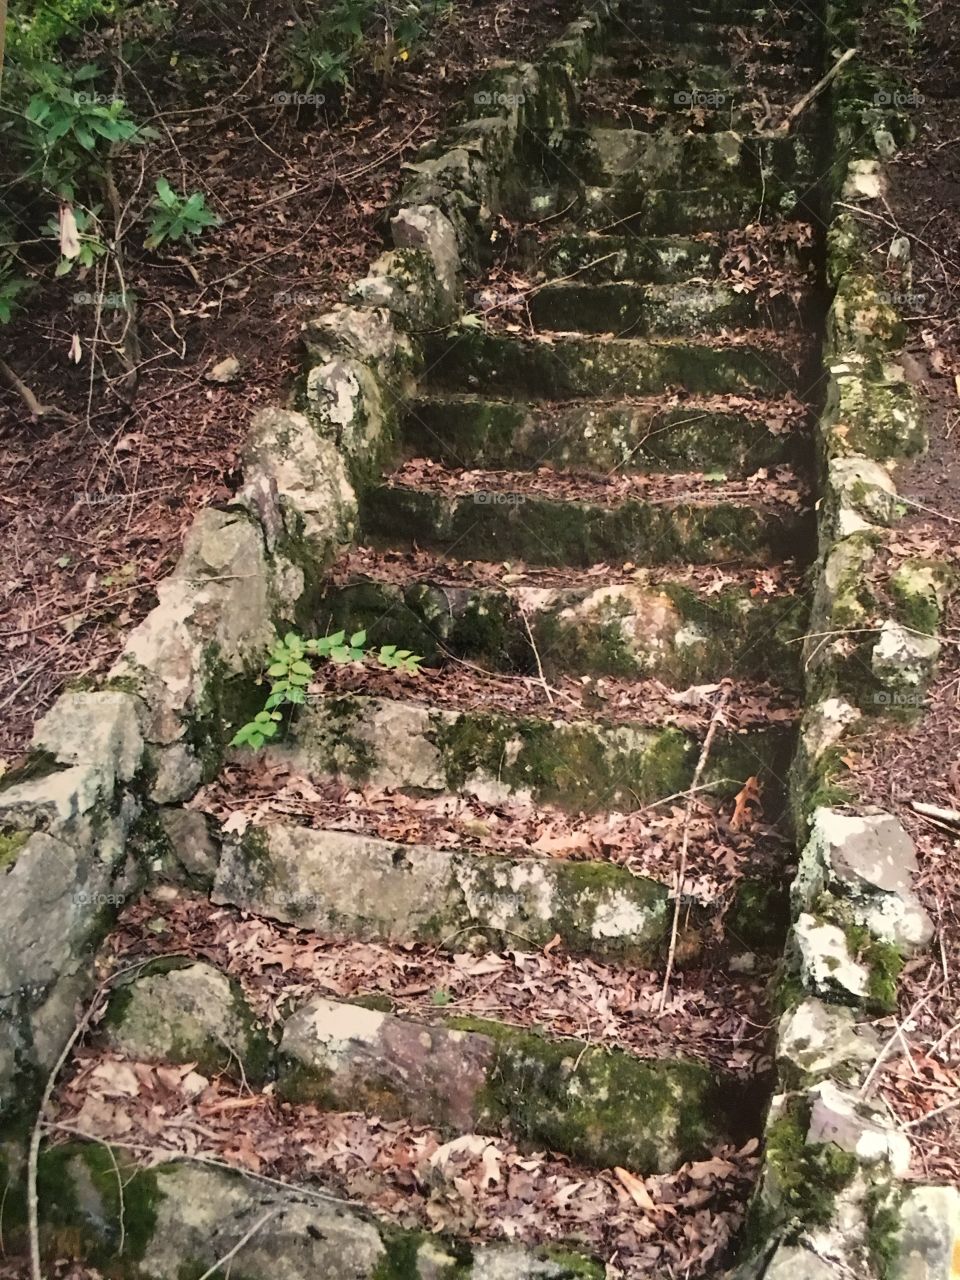 Mossy stone steps